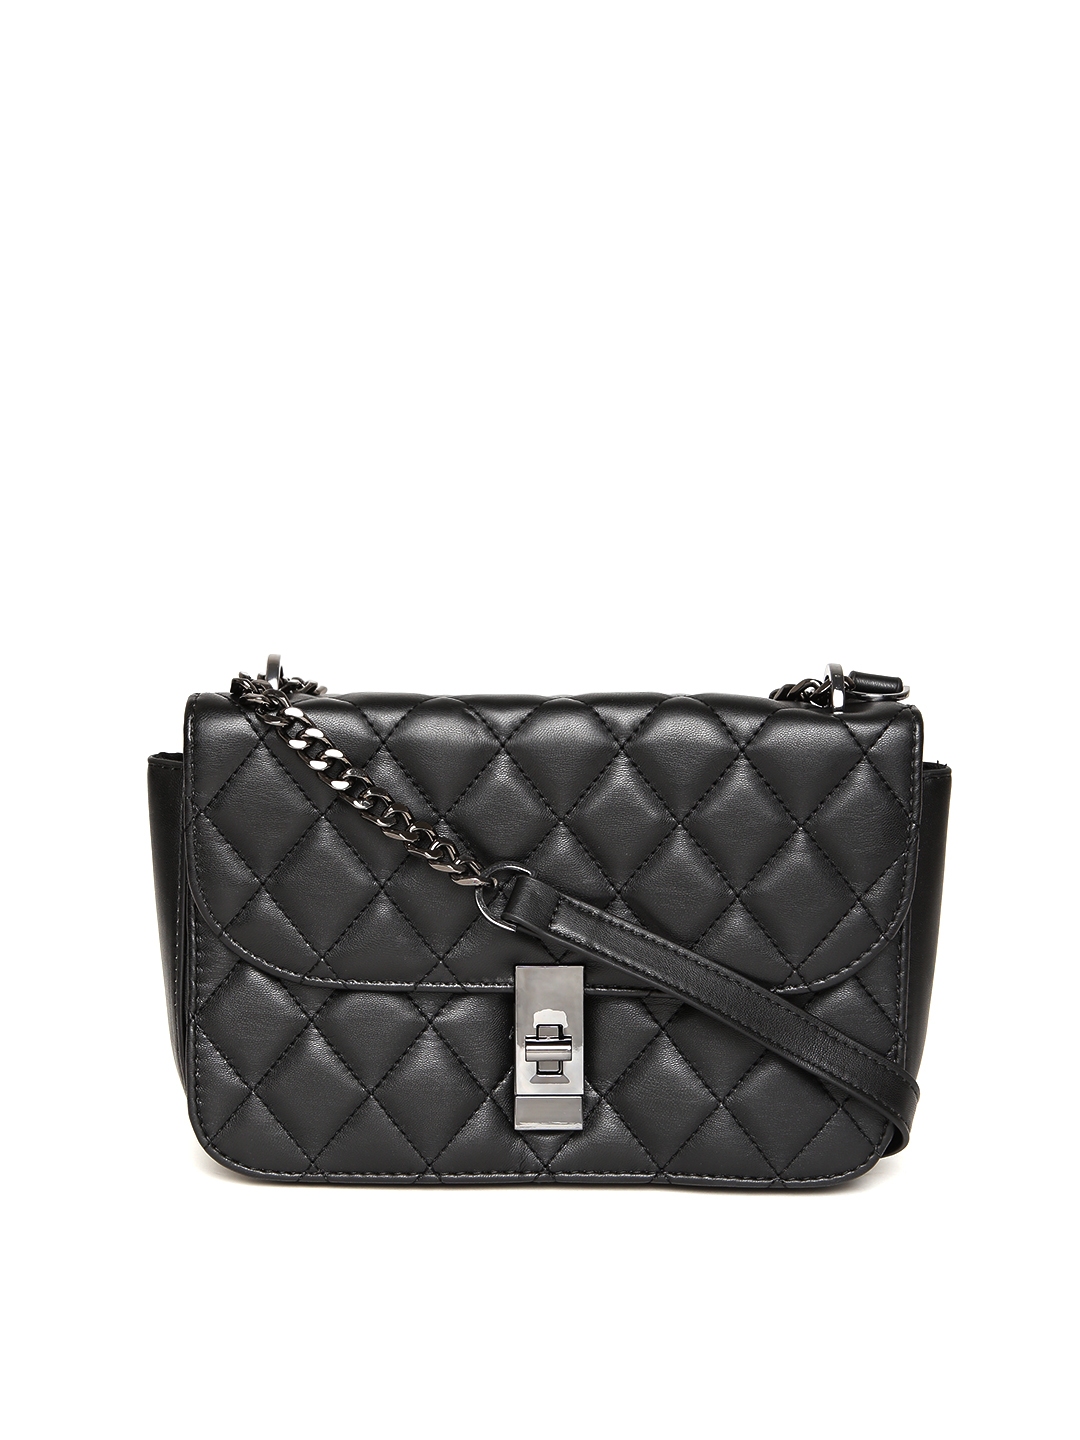 Buy MANGO Black Quilted Sling Bag - Handbags for Women 1798685 | Myntra